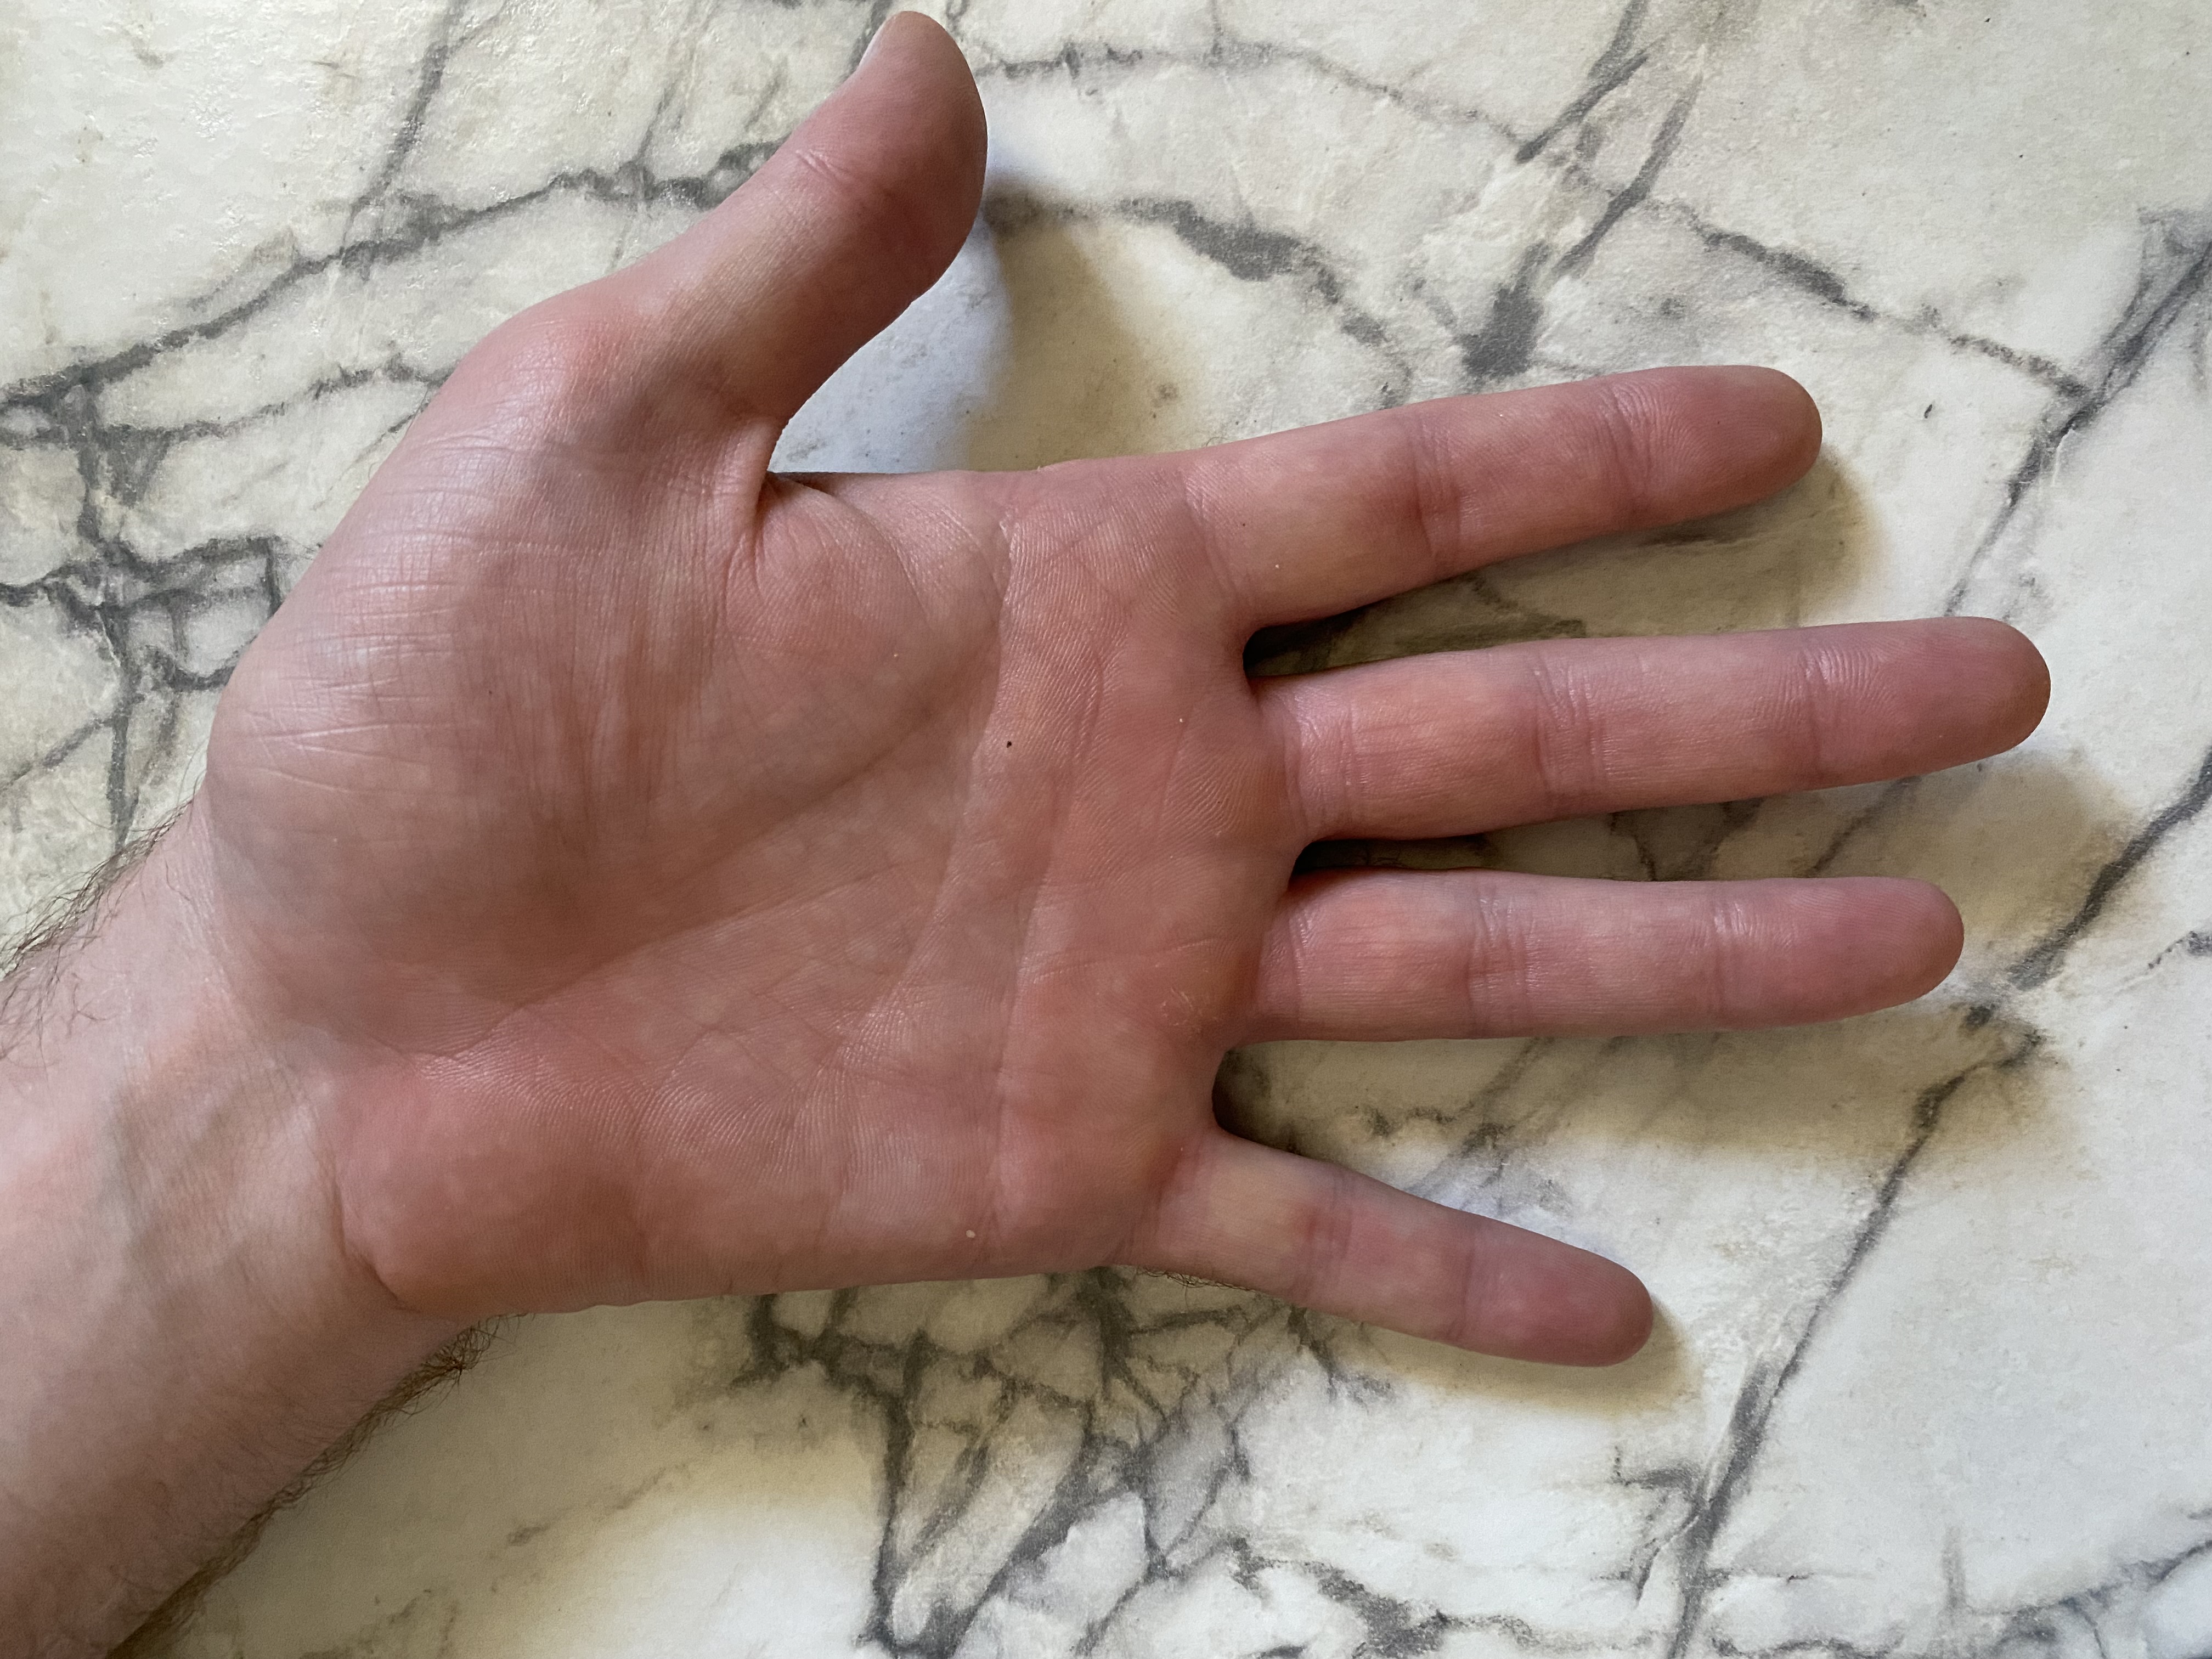 A close up of a man's left palm